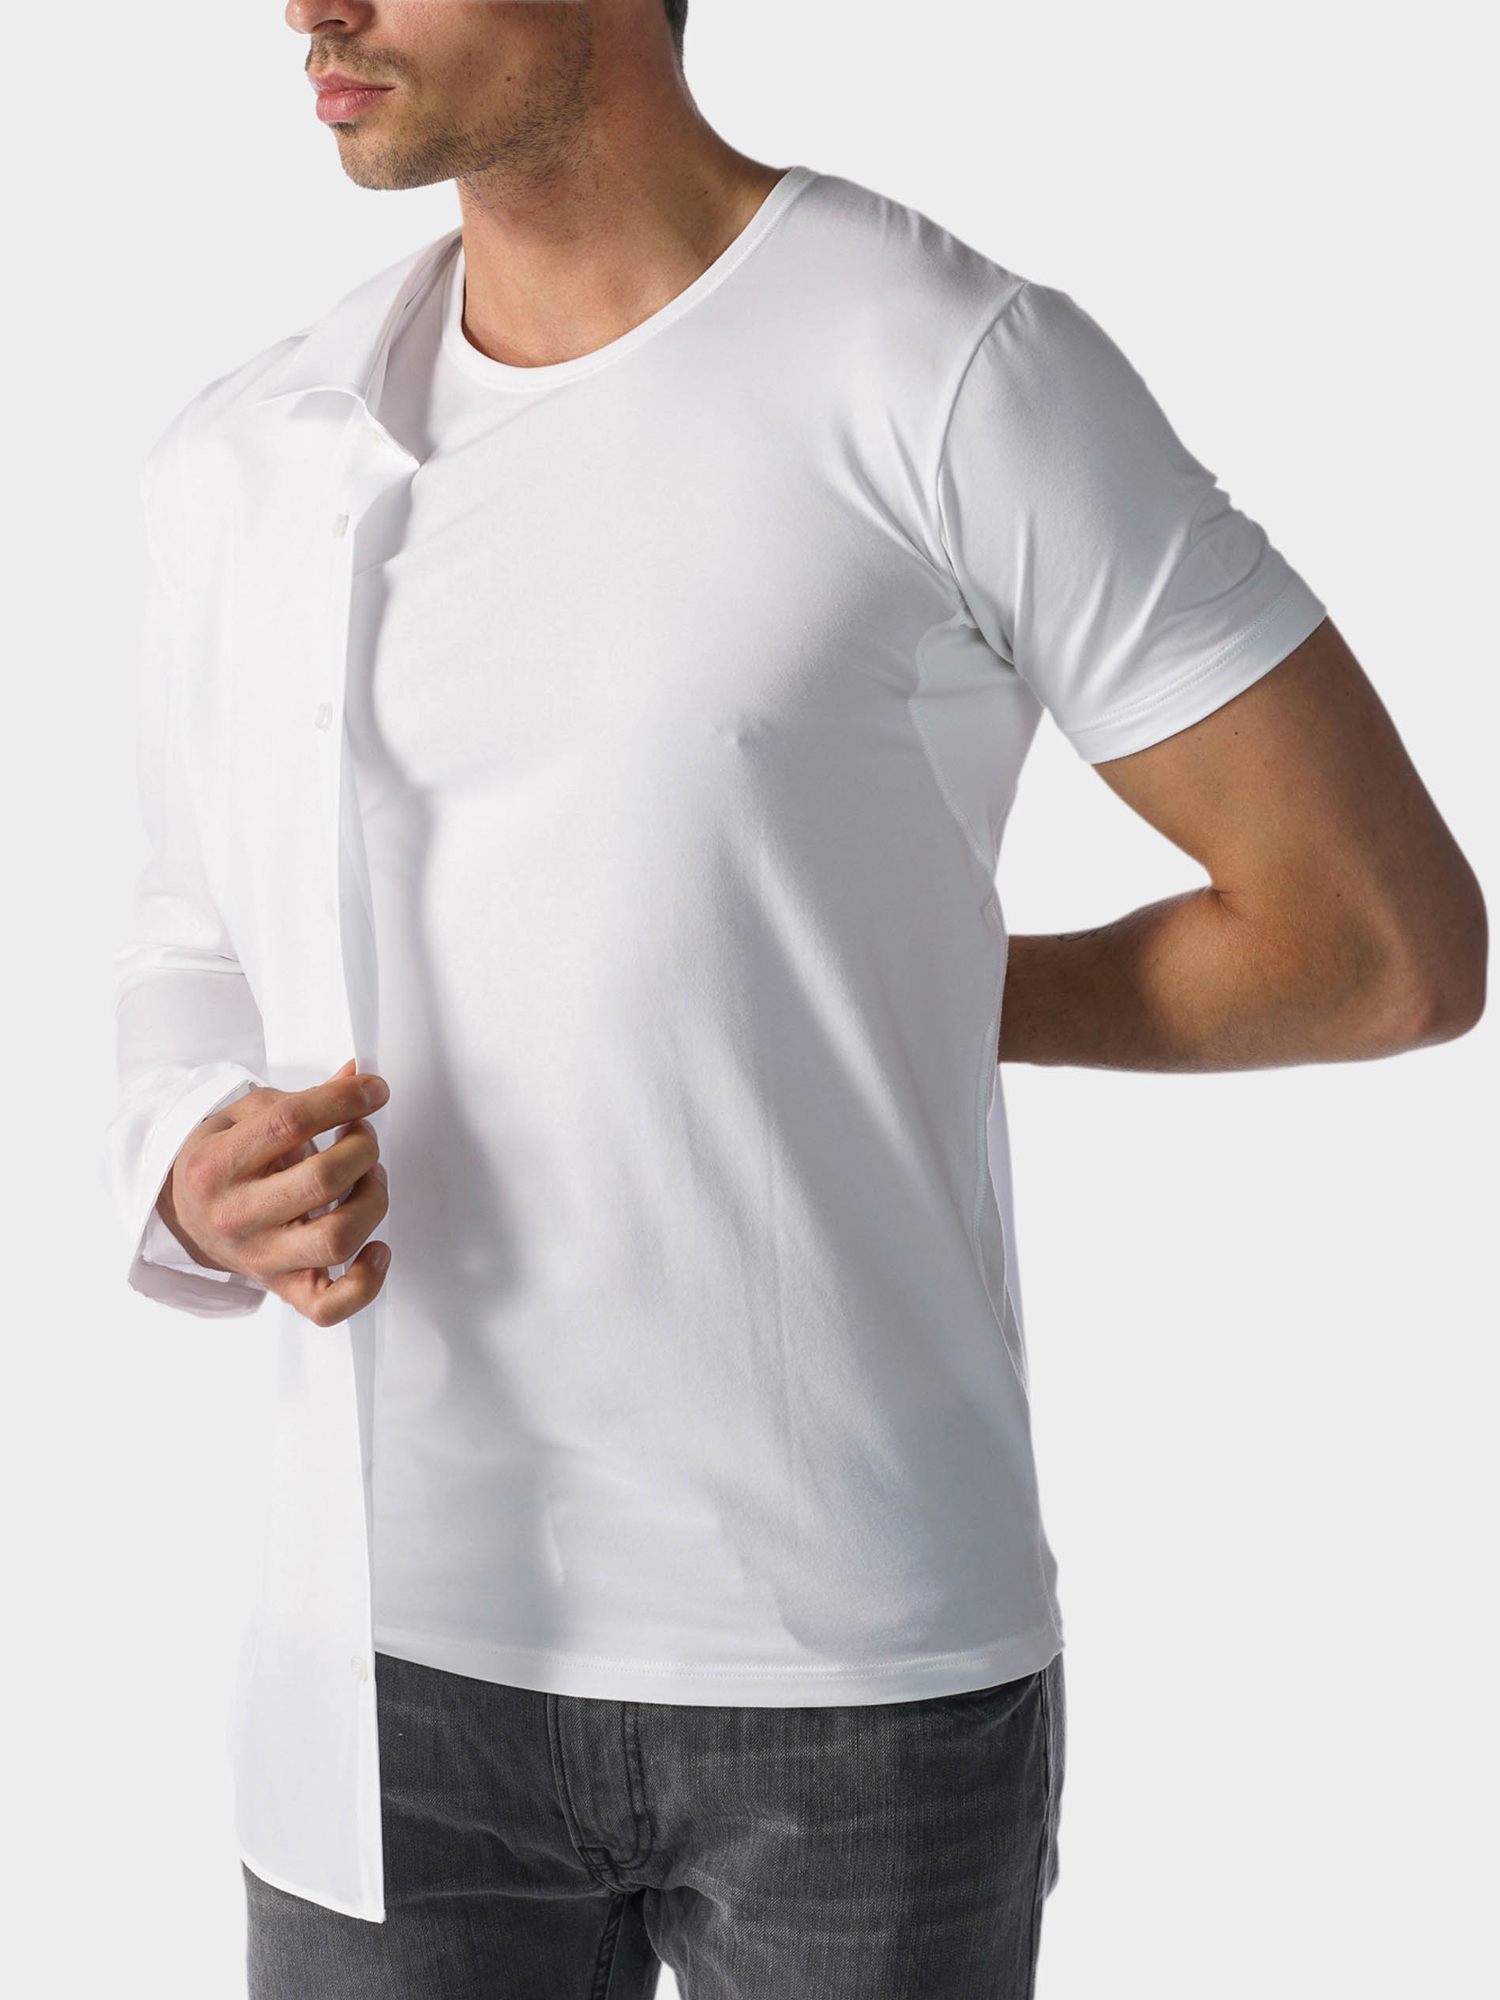 Das ideale Unterziehshirt zum Hemd | mey®